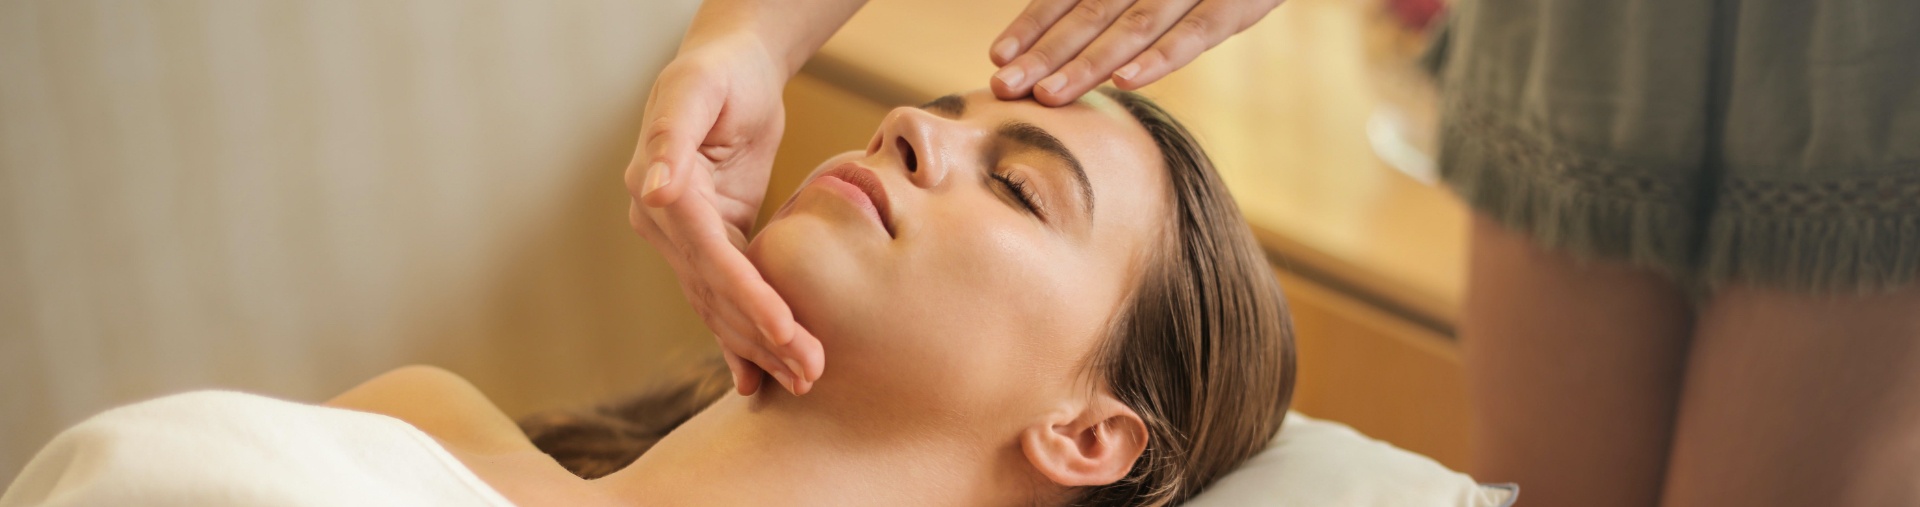 spa treatments healthy wellness